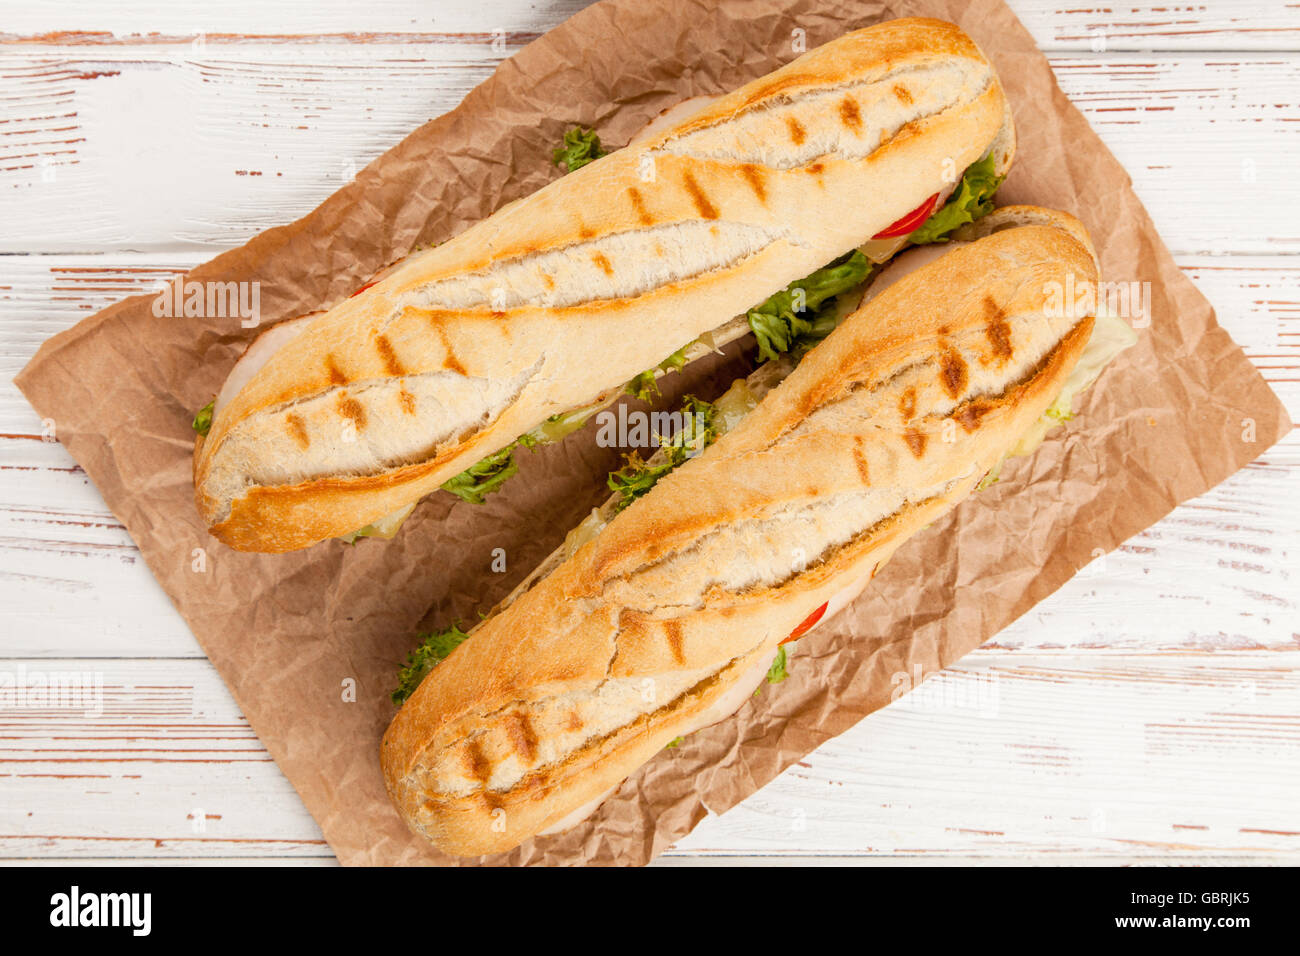 Panini grilled sandwich Stock Photo